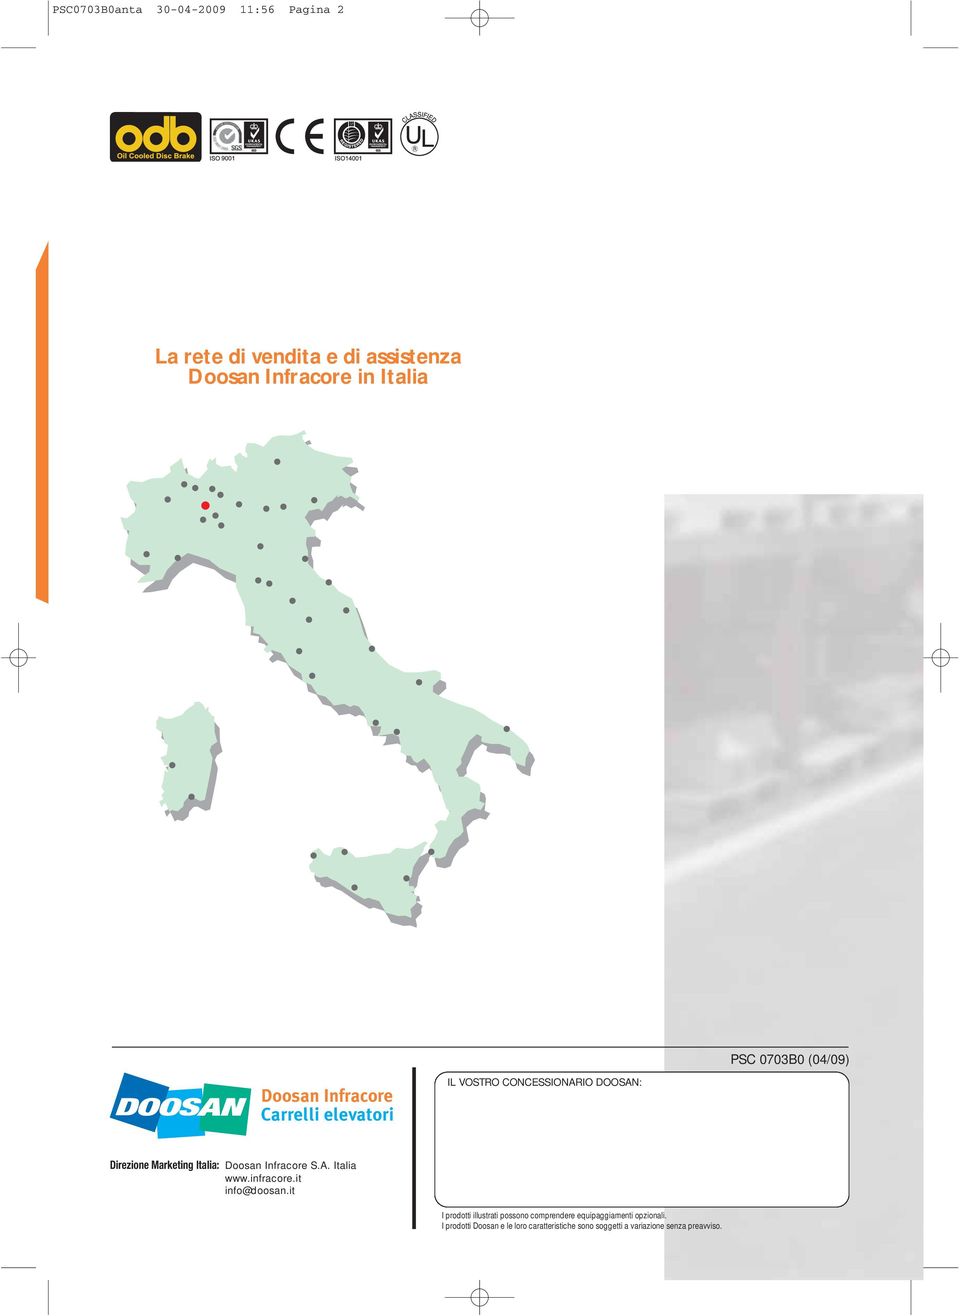 Italia: Doosan Infracore S.A. Italia www.infracore.it info@doosan.